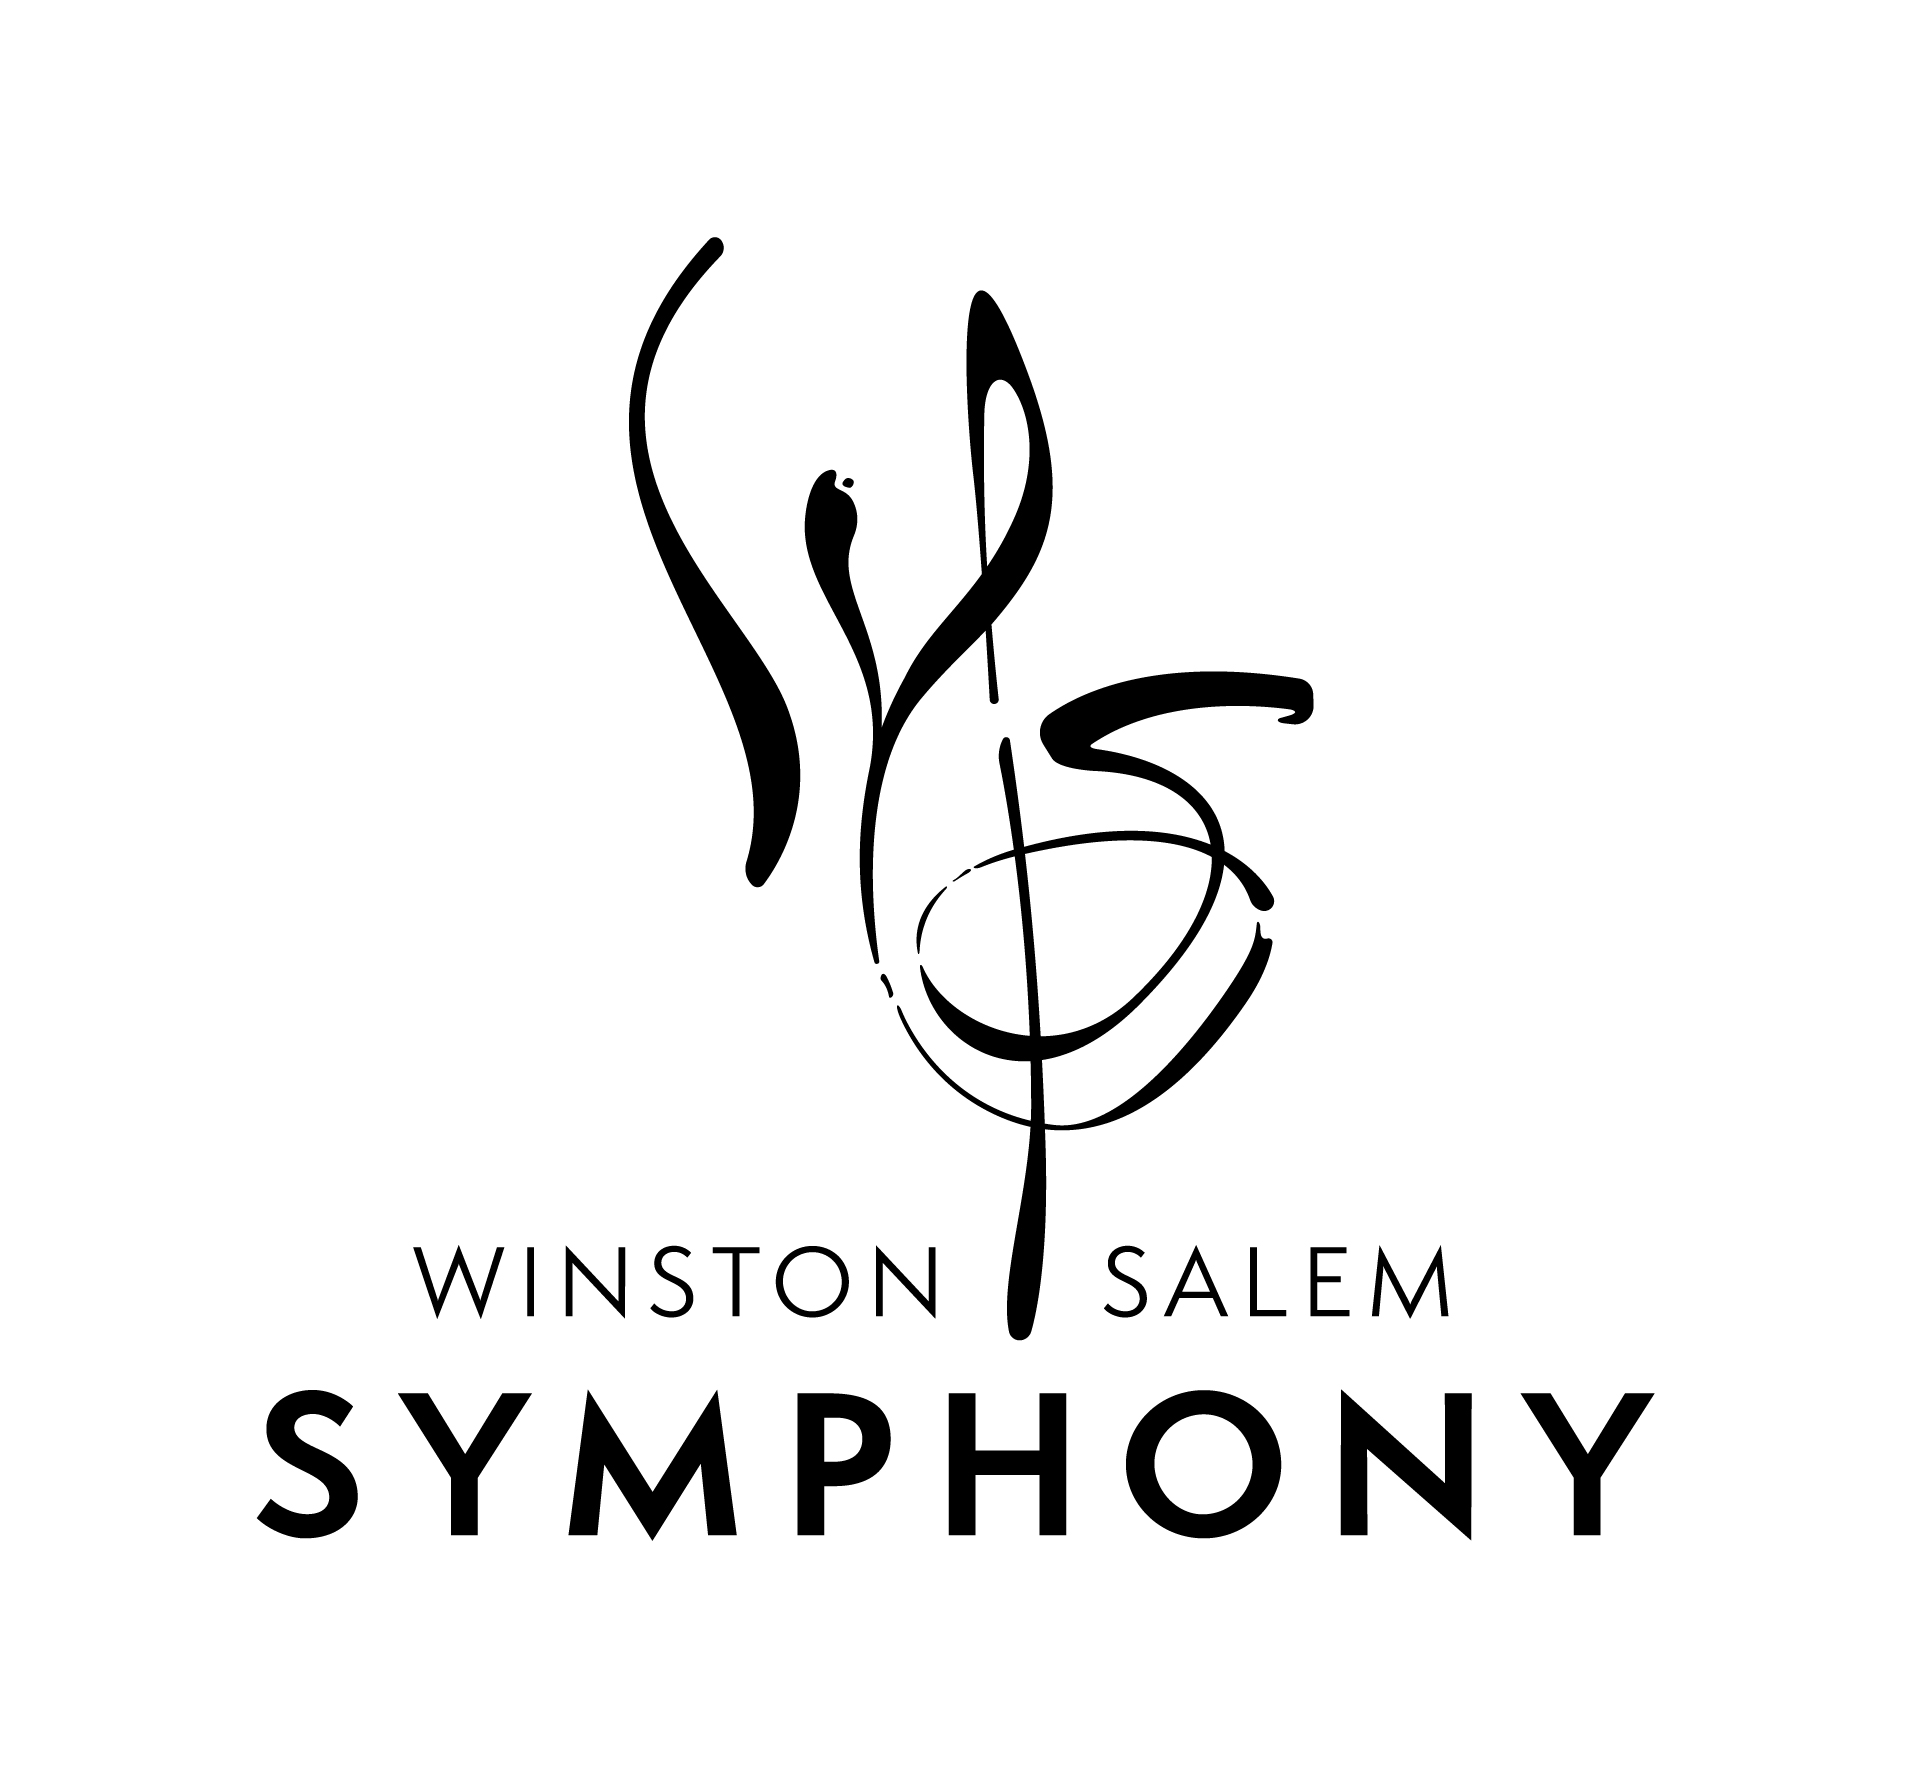 WinstonSalem Symphony 301 North Main Street, Suite 1901 Visit